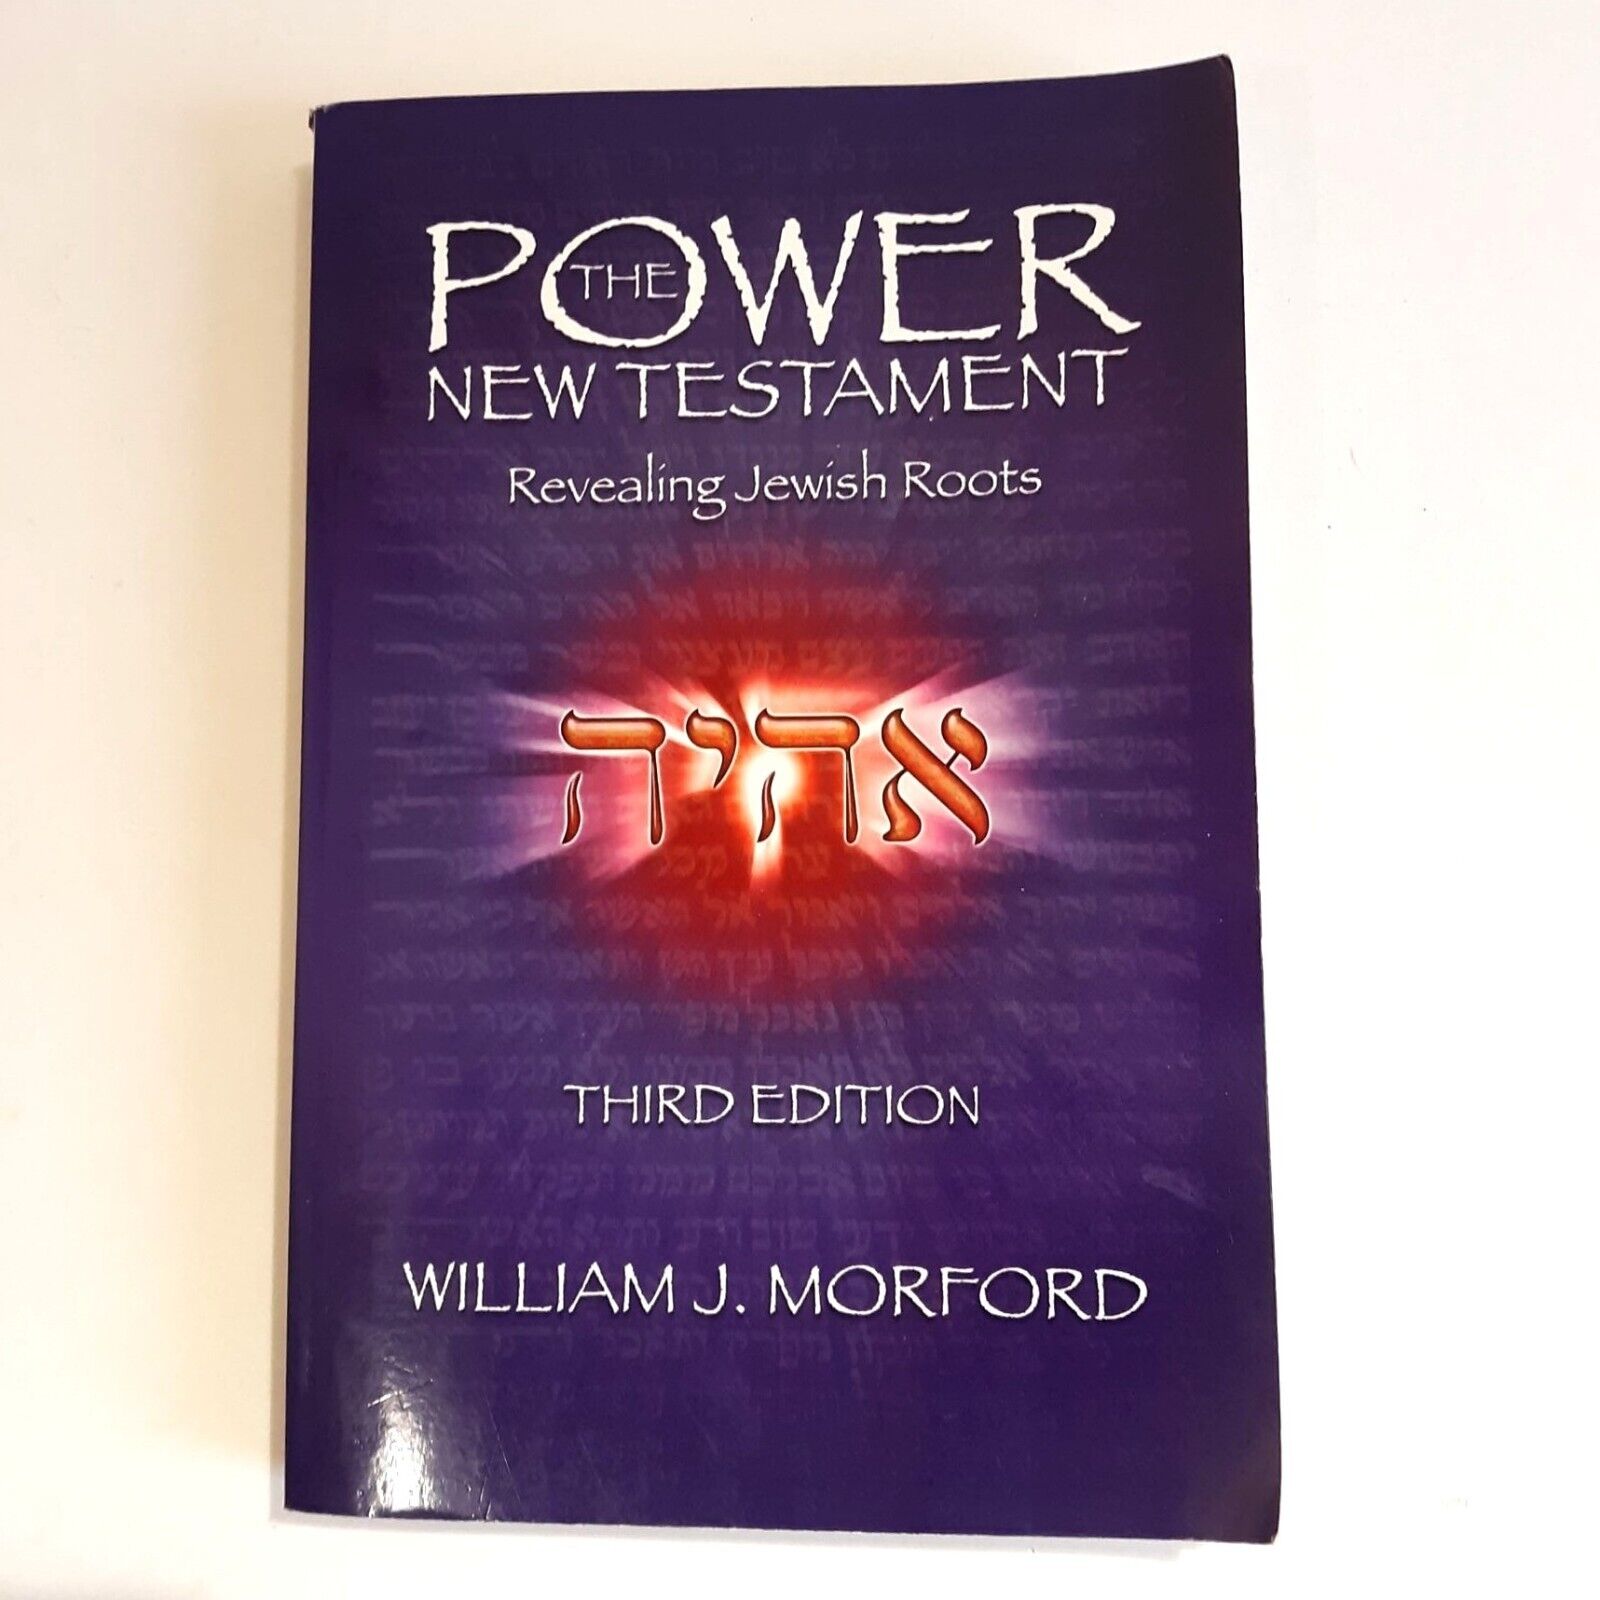 The Power New Testament Revealing Jewish Roots 2003 3rd Ed. PB Wm.J.Morford